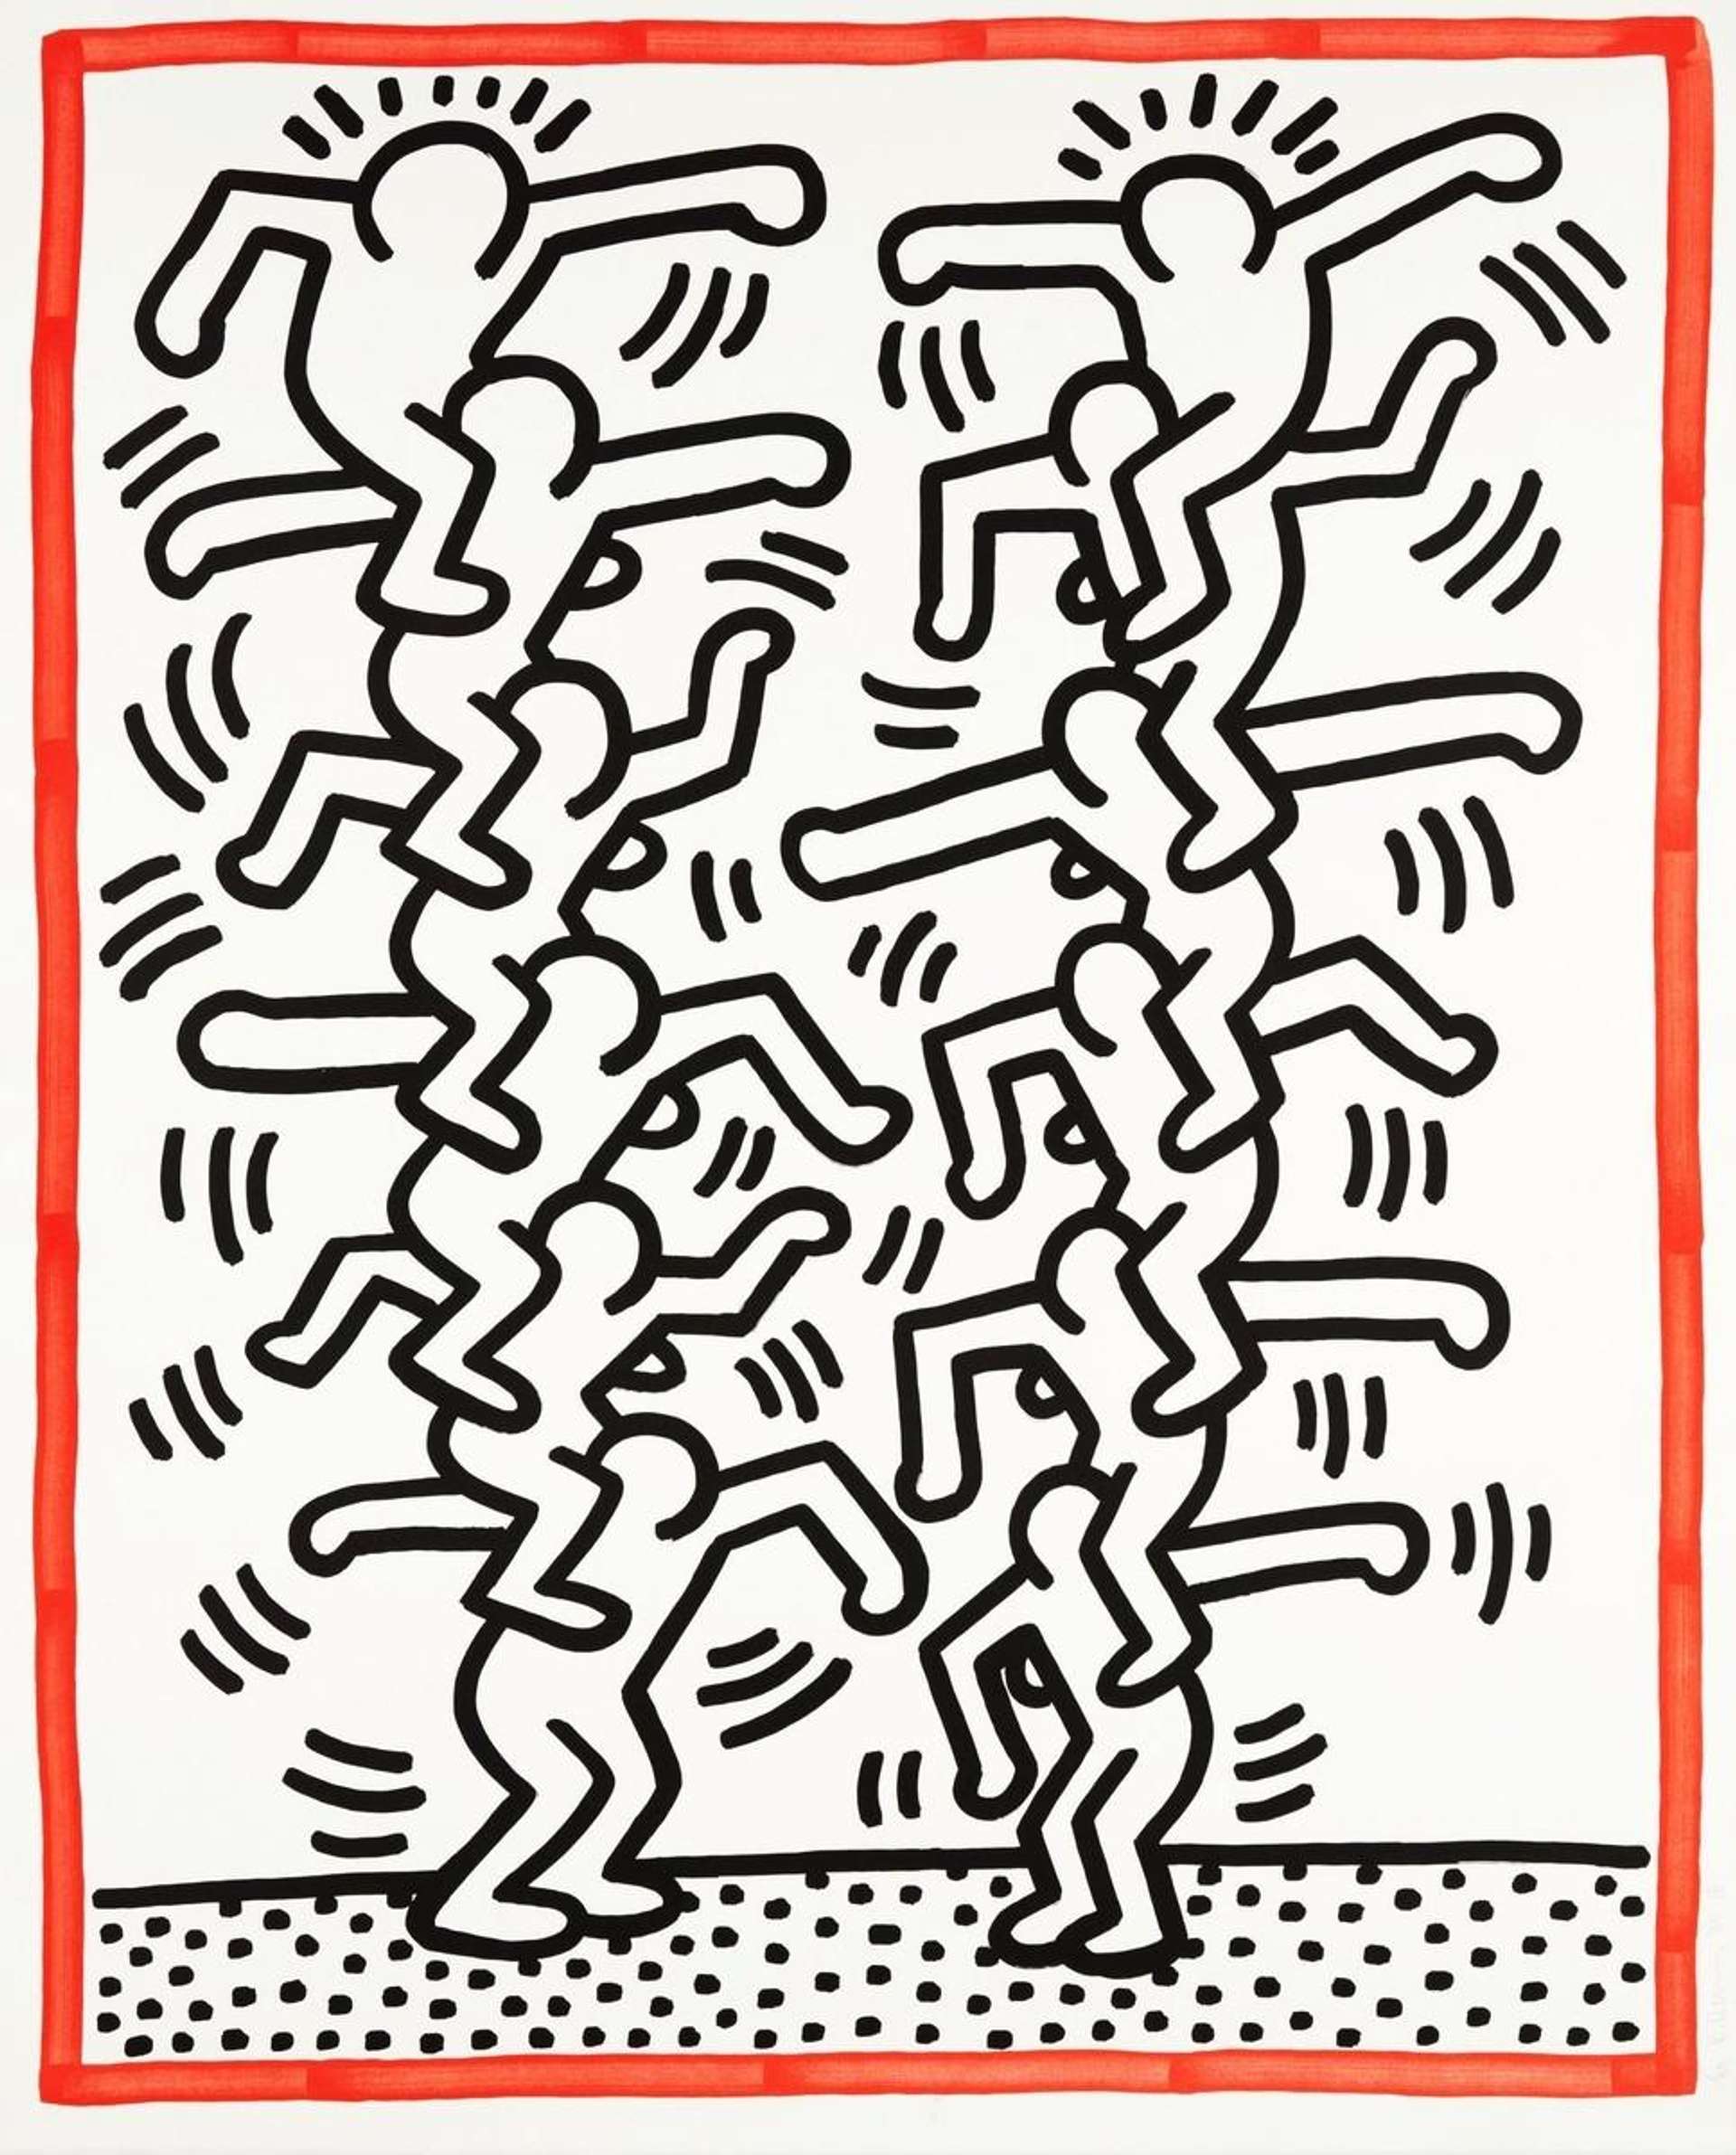 Keith Haring and The Berlin Wall 